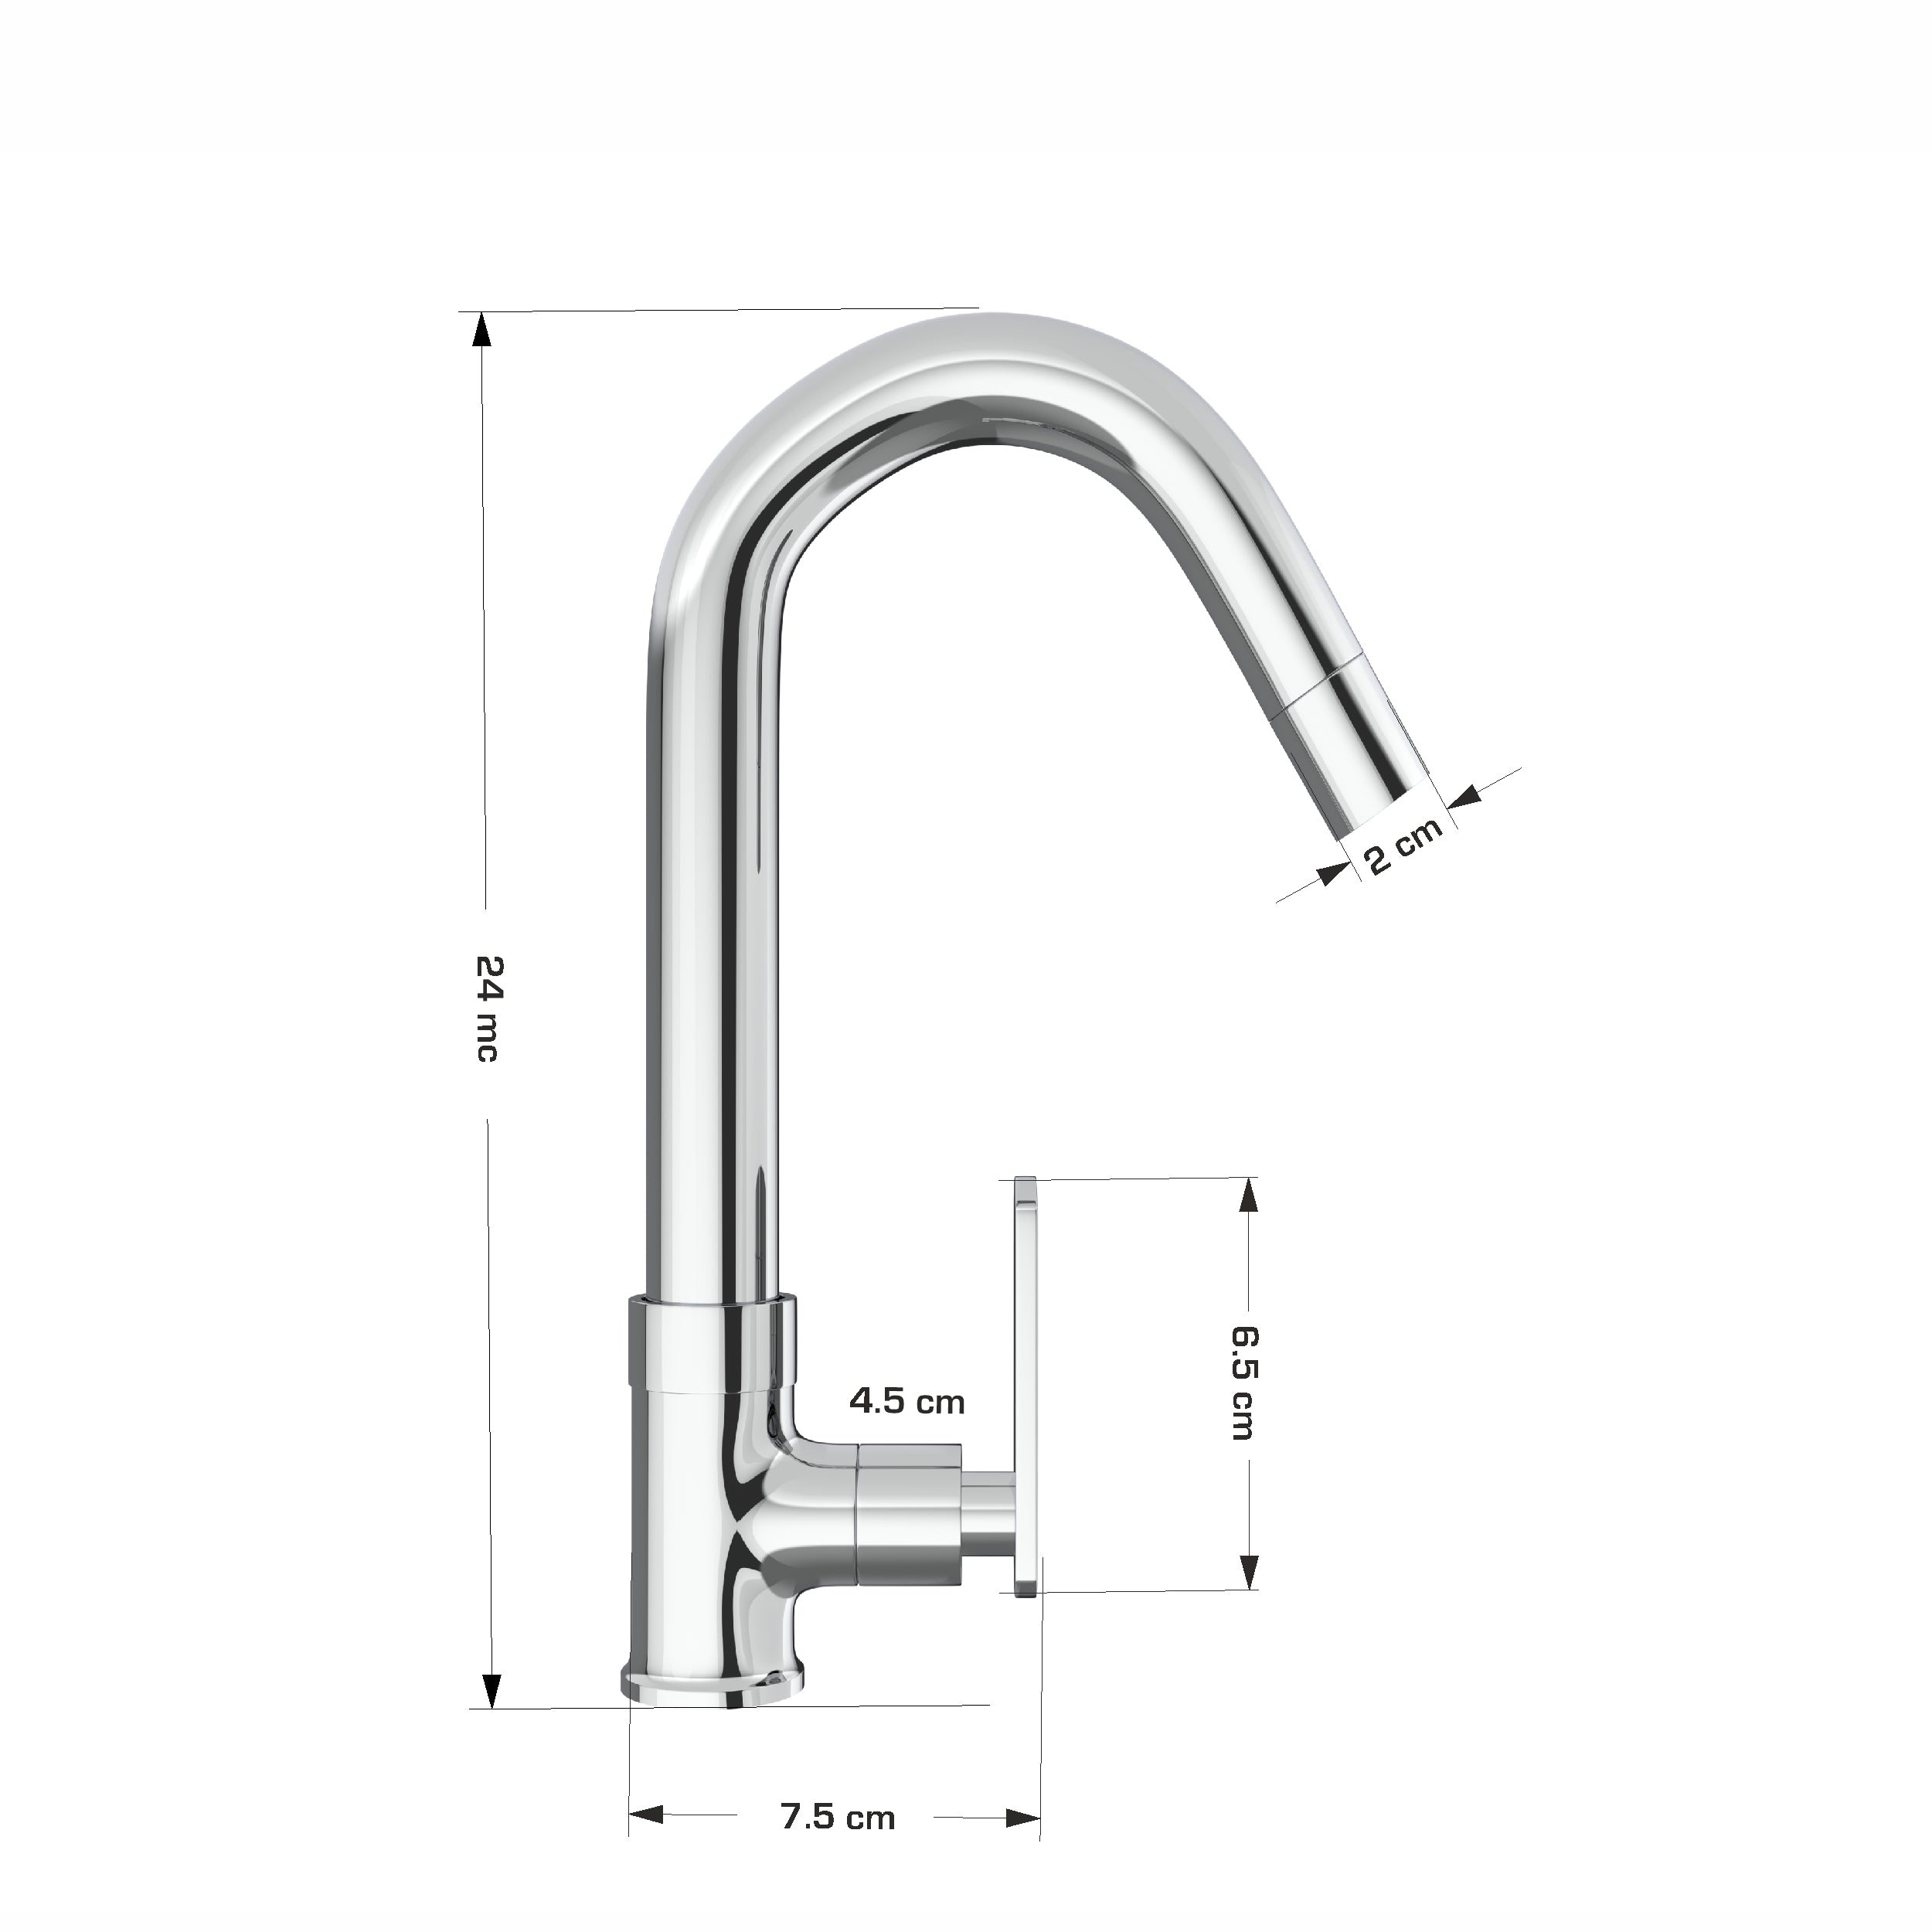 Chrome Finish Swivel Spout Deck Mount Swan Faucet Tap for Sink